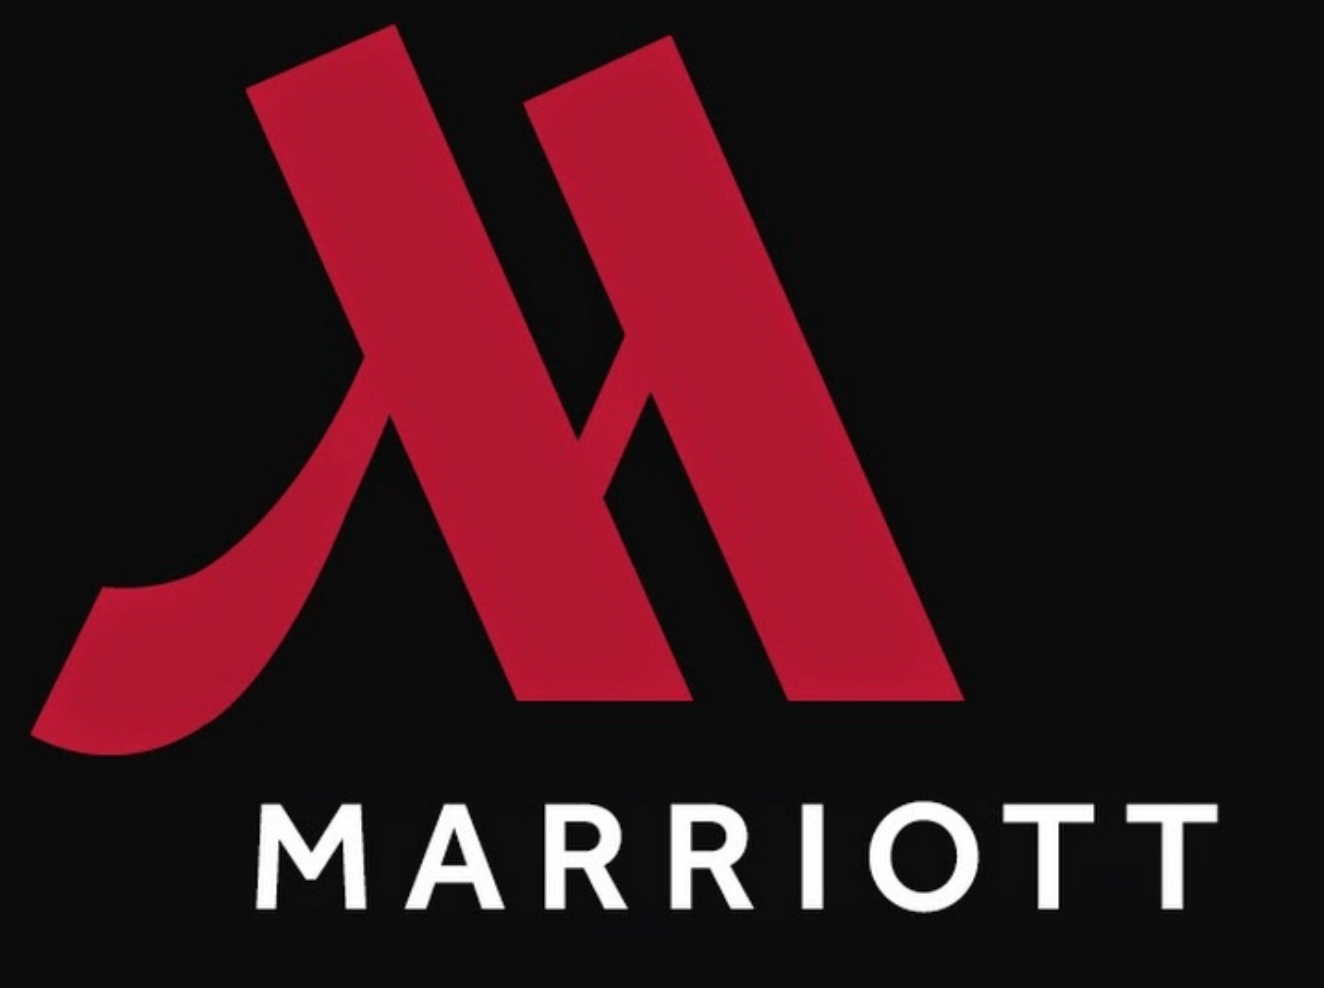 marriott-logo.png